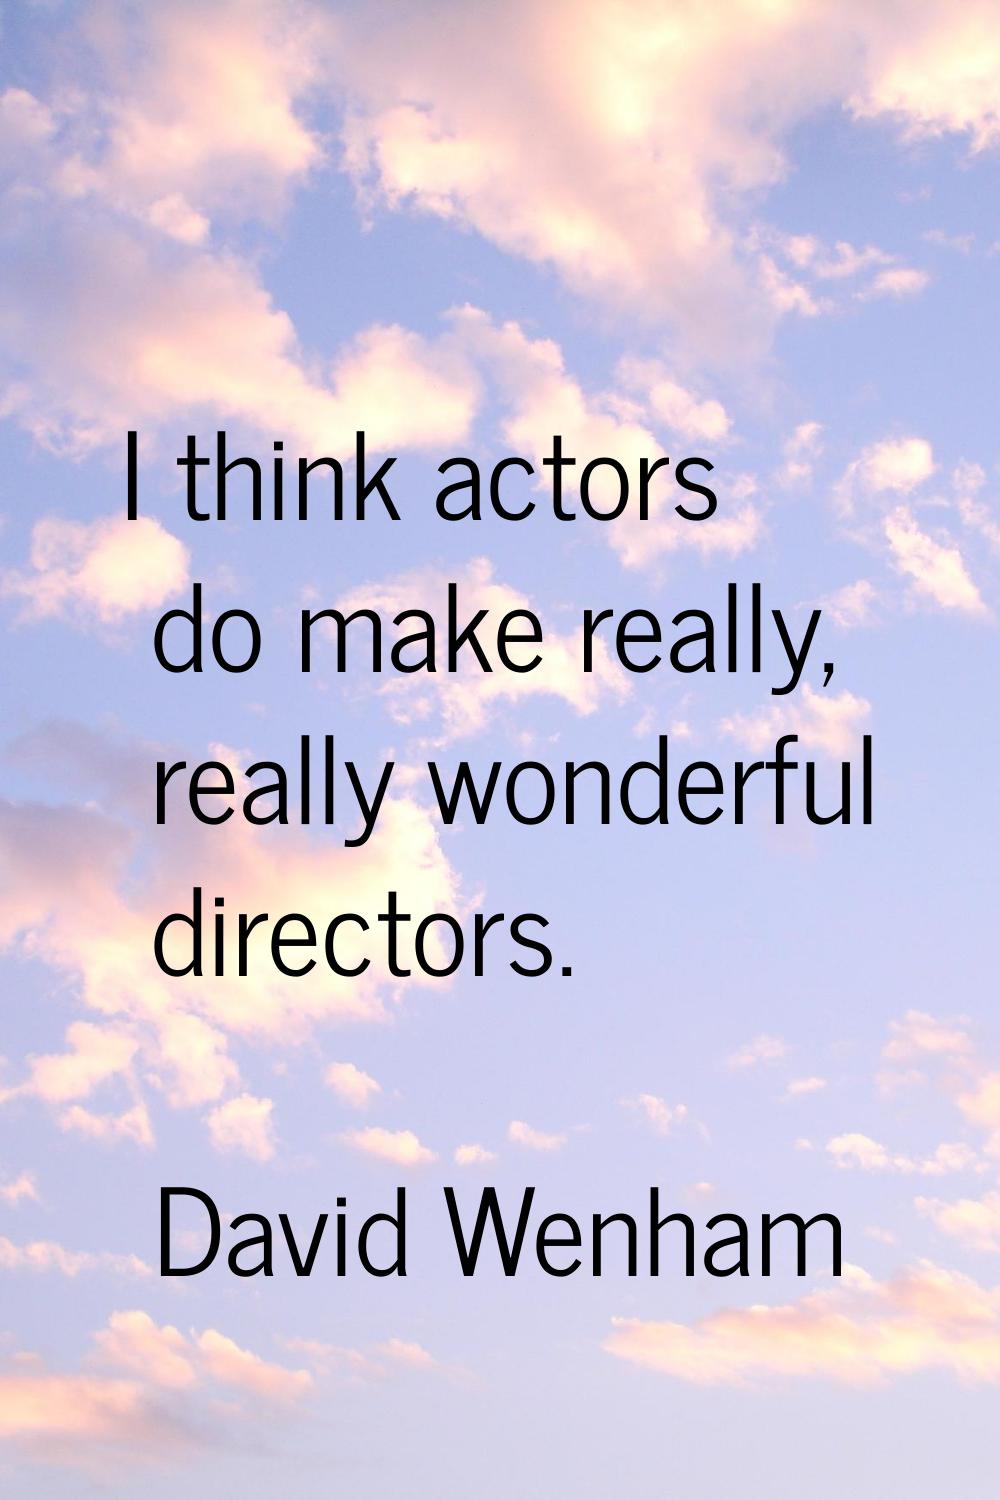 I think actors do make really, really wonderful directors.